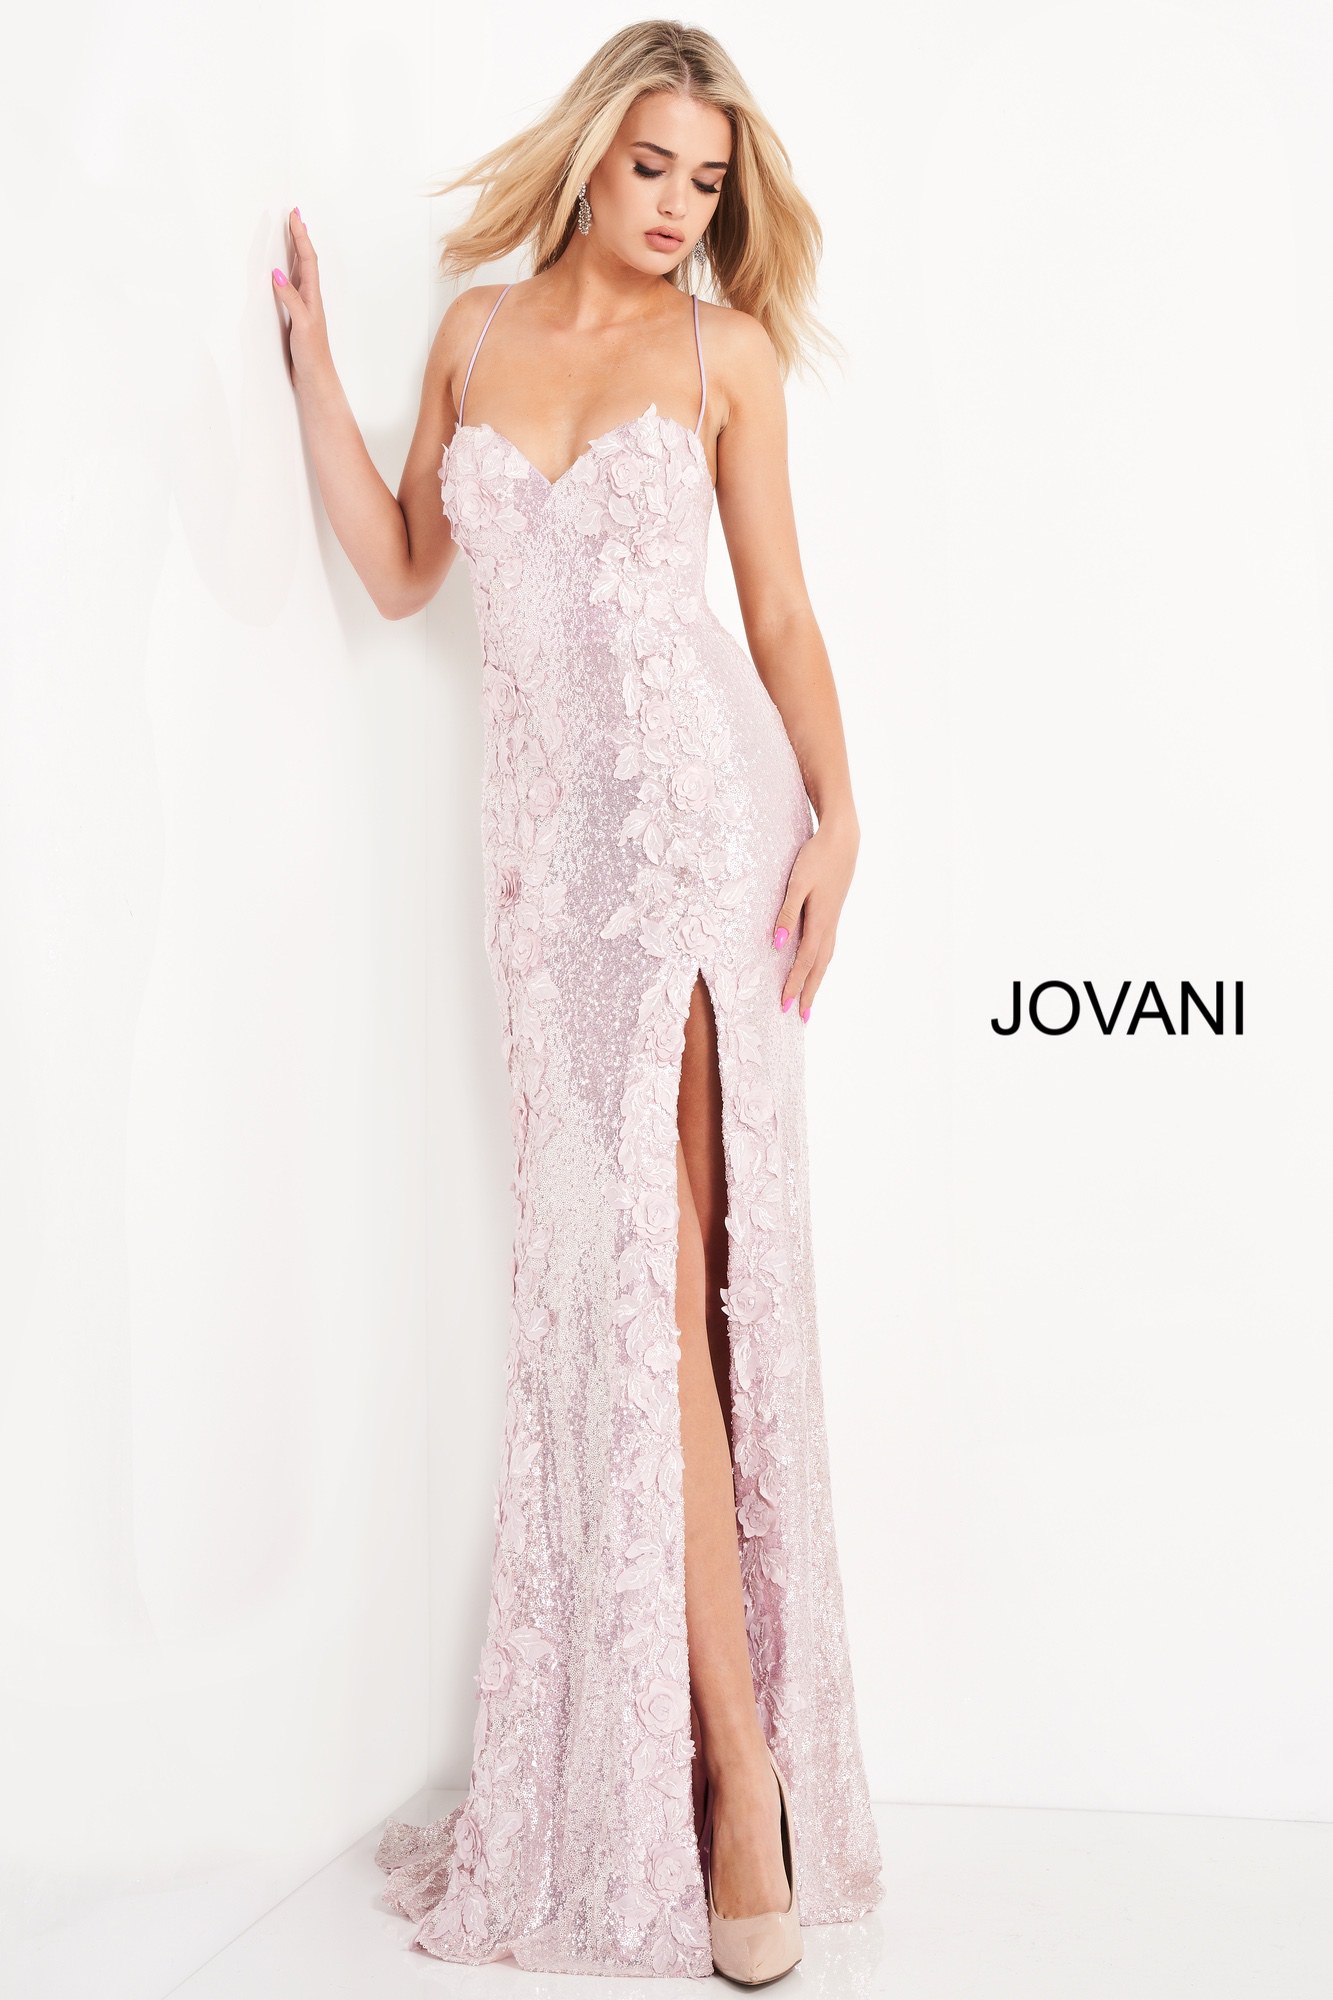 Jovani 06109 Pink Sequin Floral Applique Prom Dress